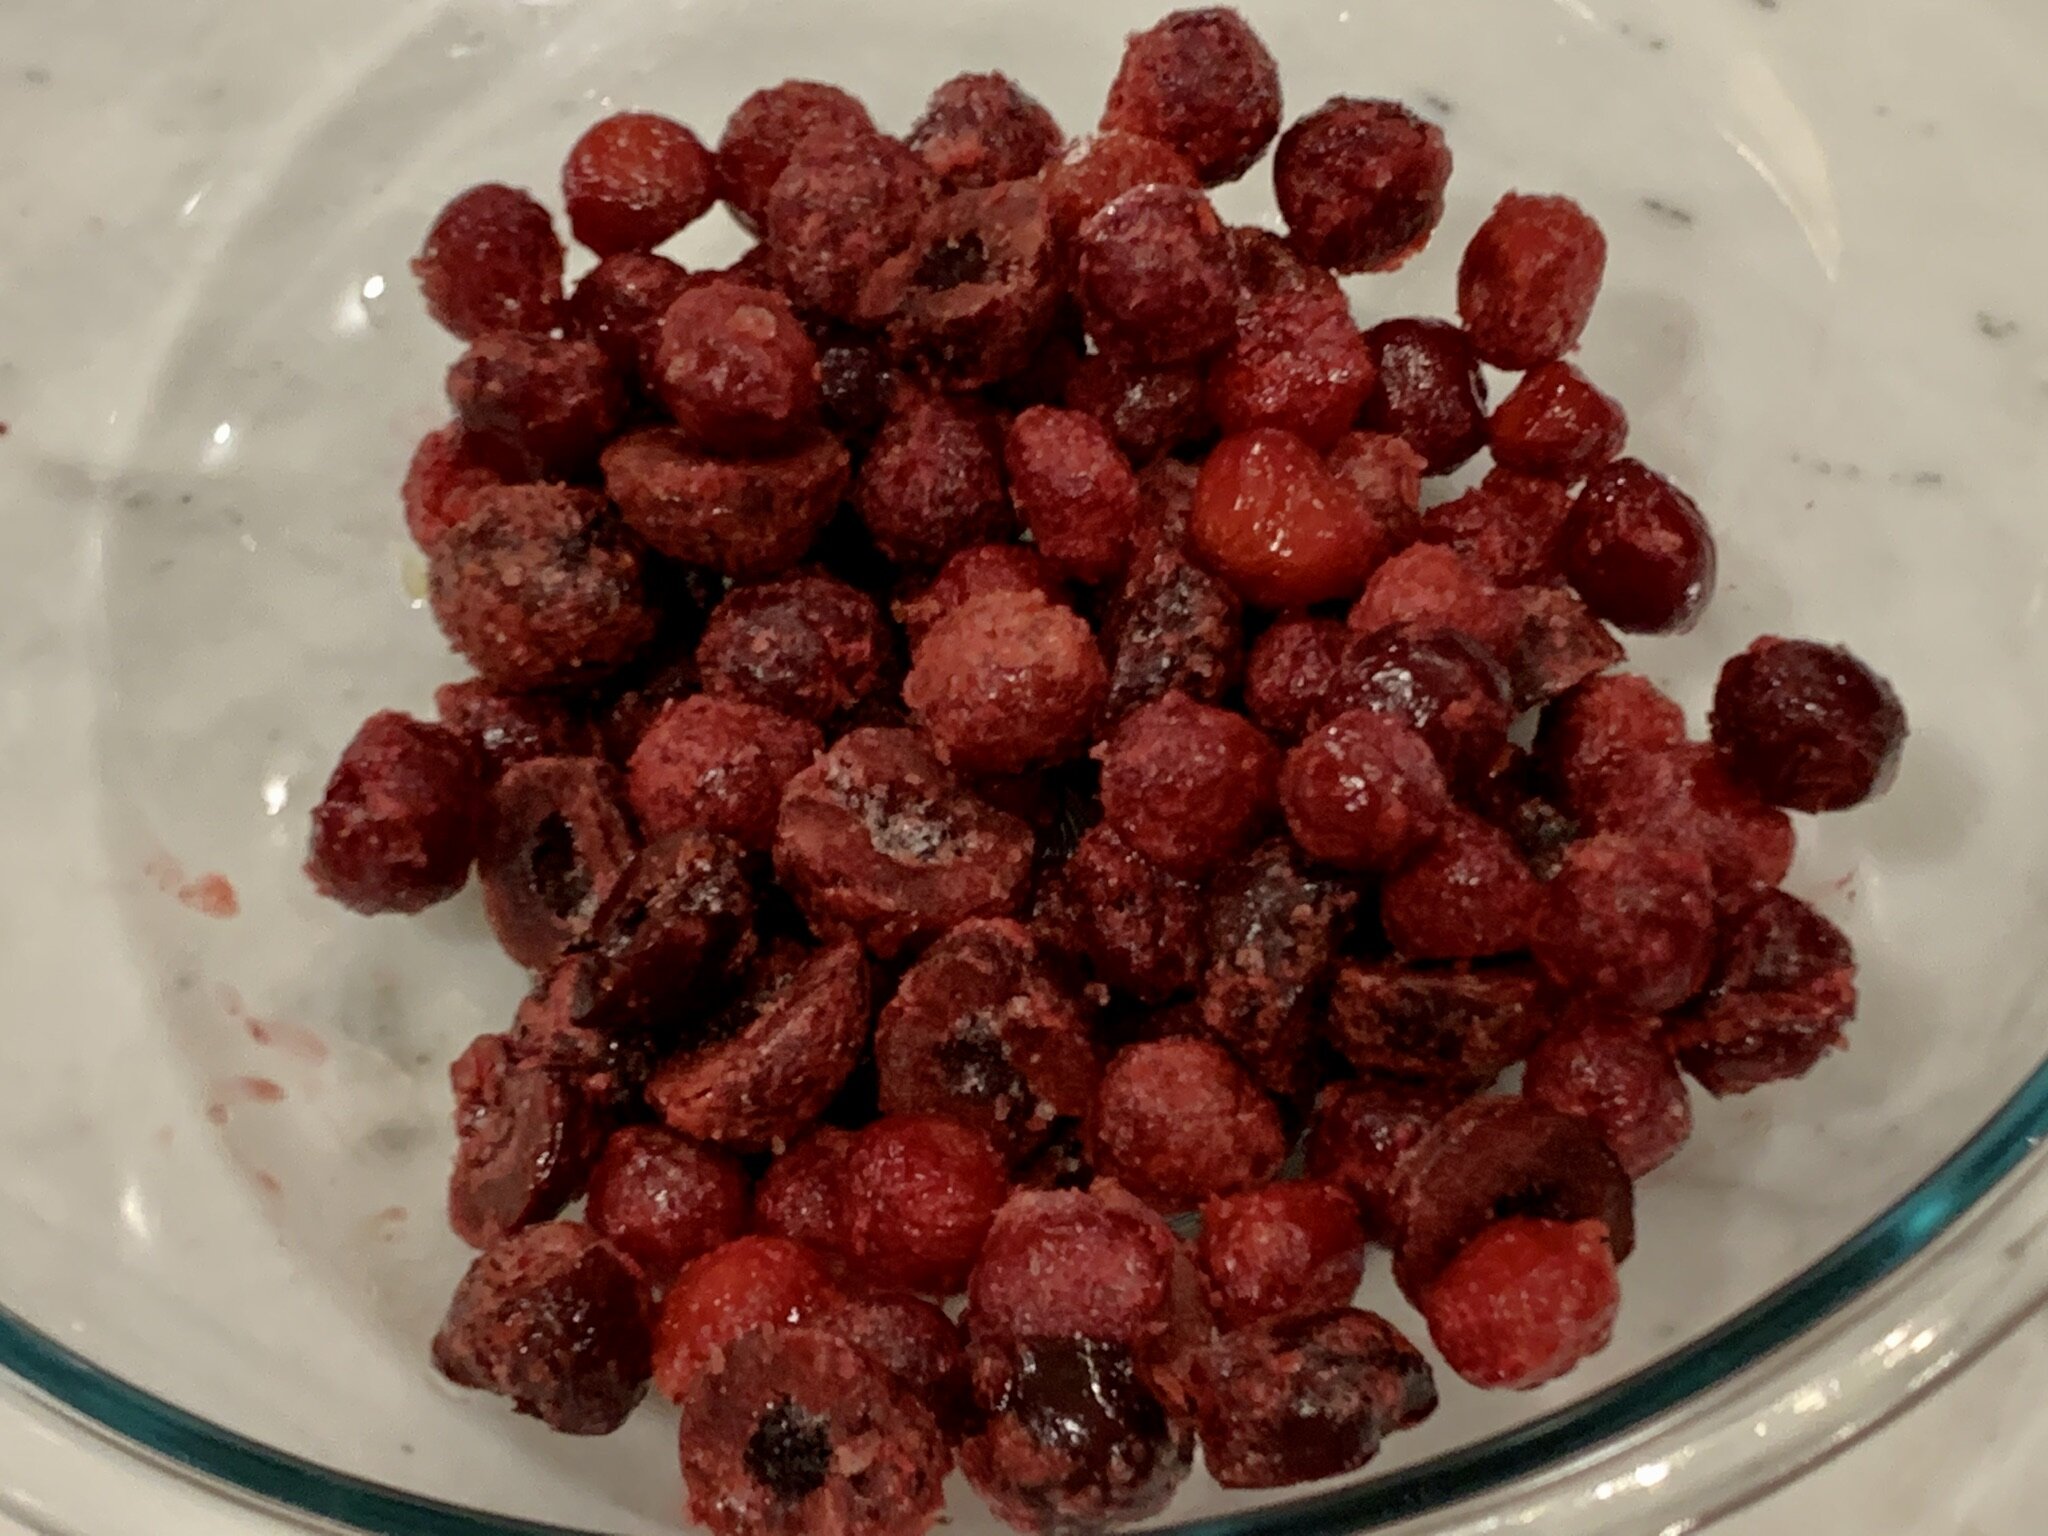 a) Add cherries